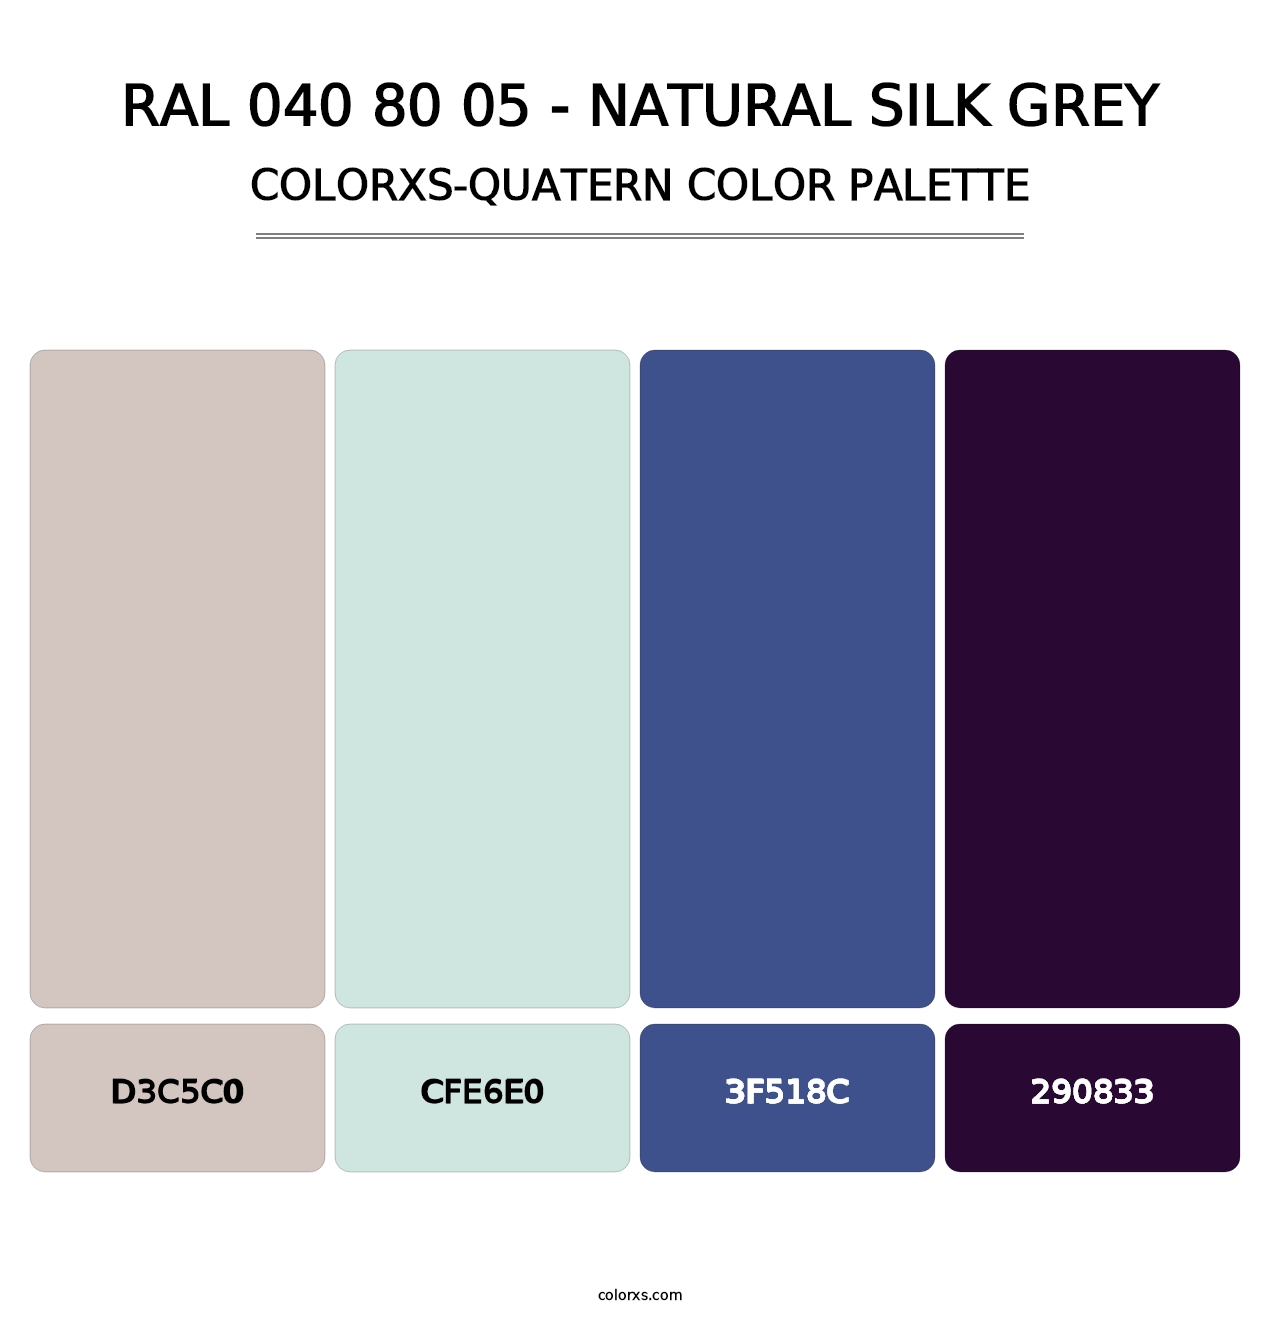 RAL 040 80 05 - Natural Silk Grey - Colorxs Quatern Palette